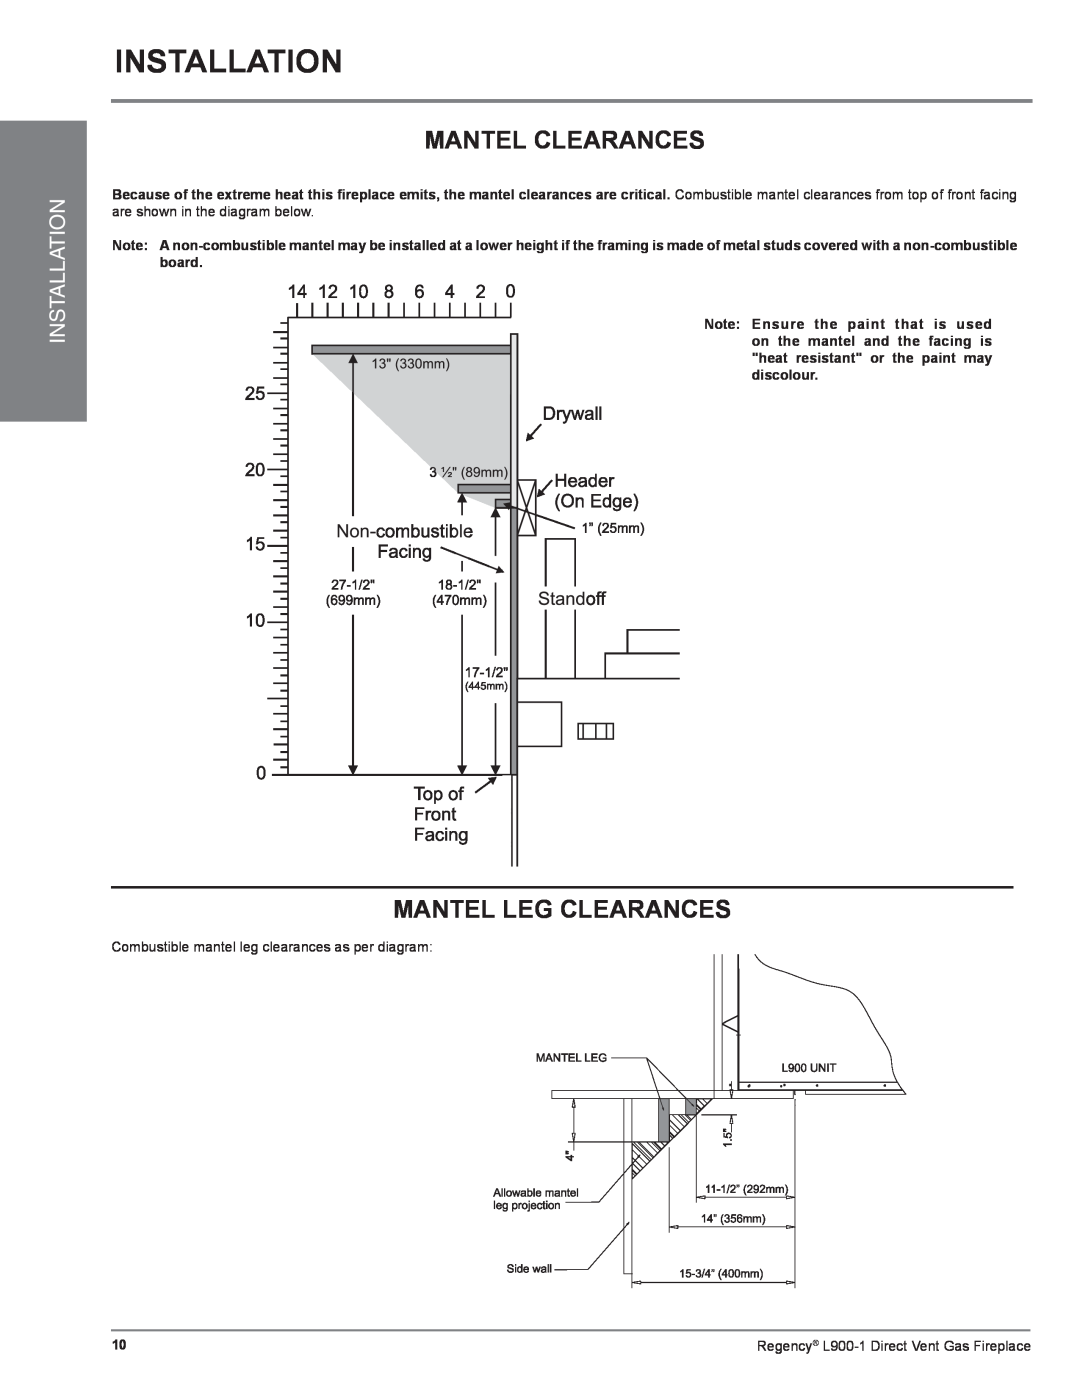 Regency L900-1 installation manual Installation, Mantel Clearances, Mantel Leg Clearances 